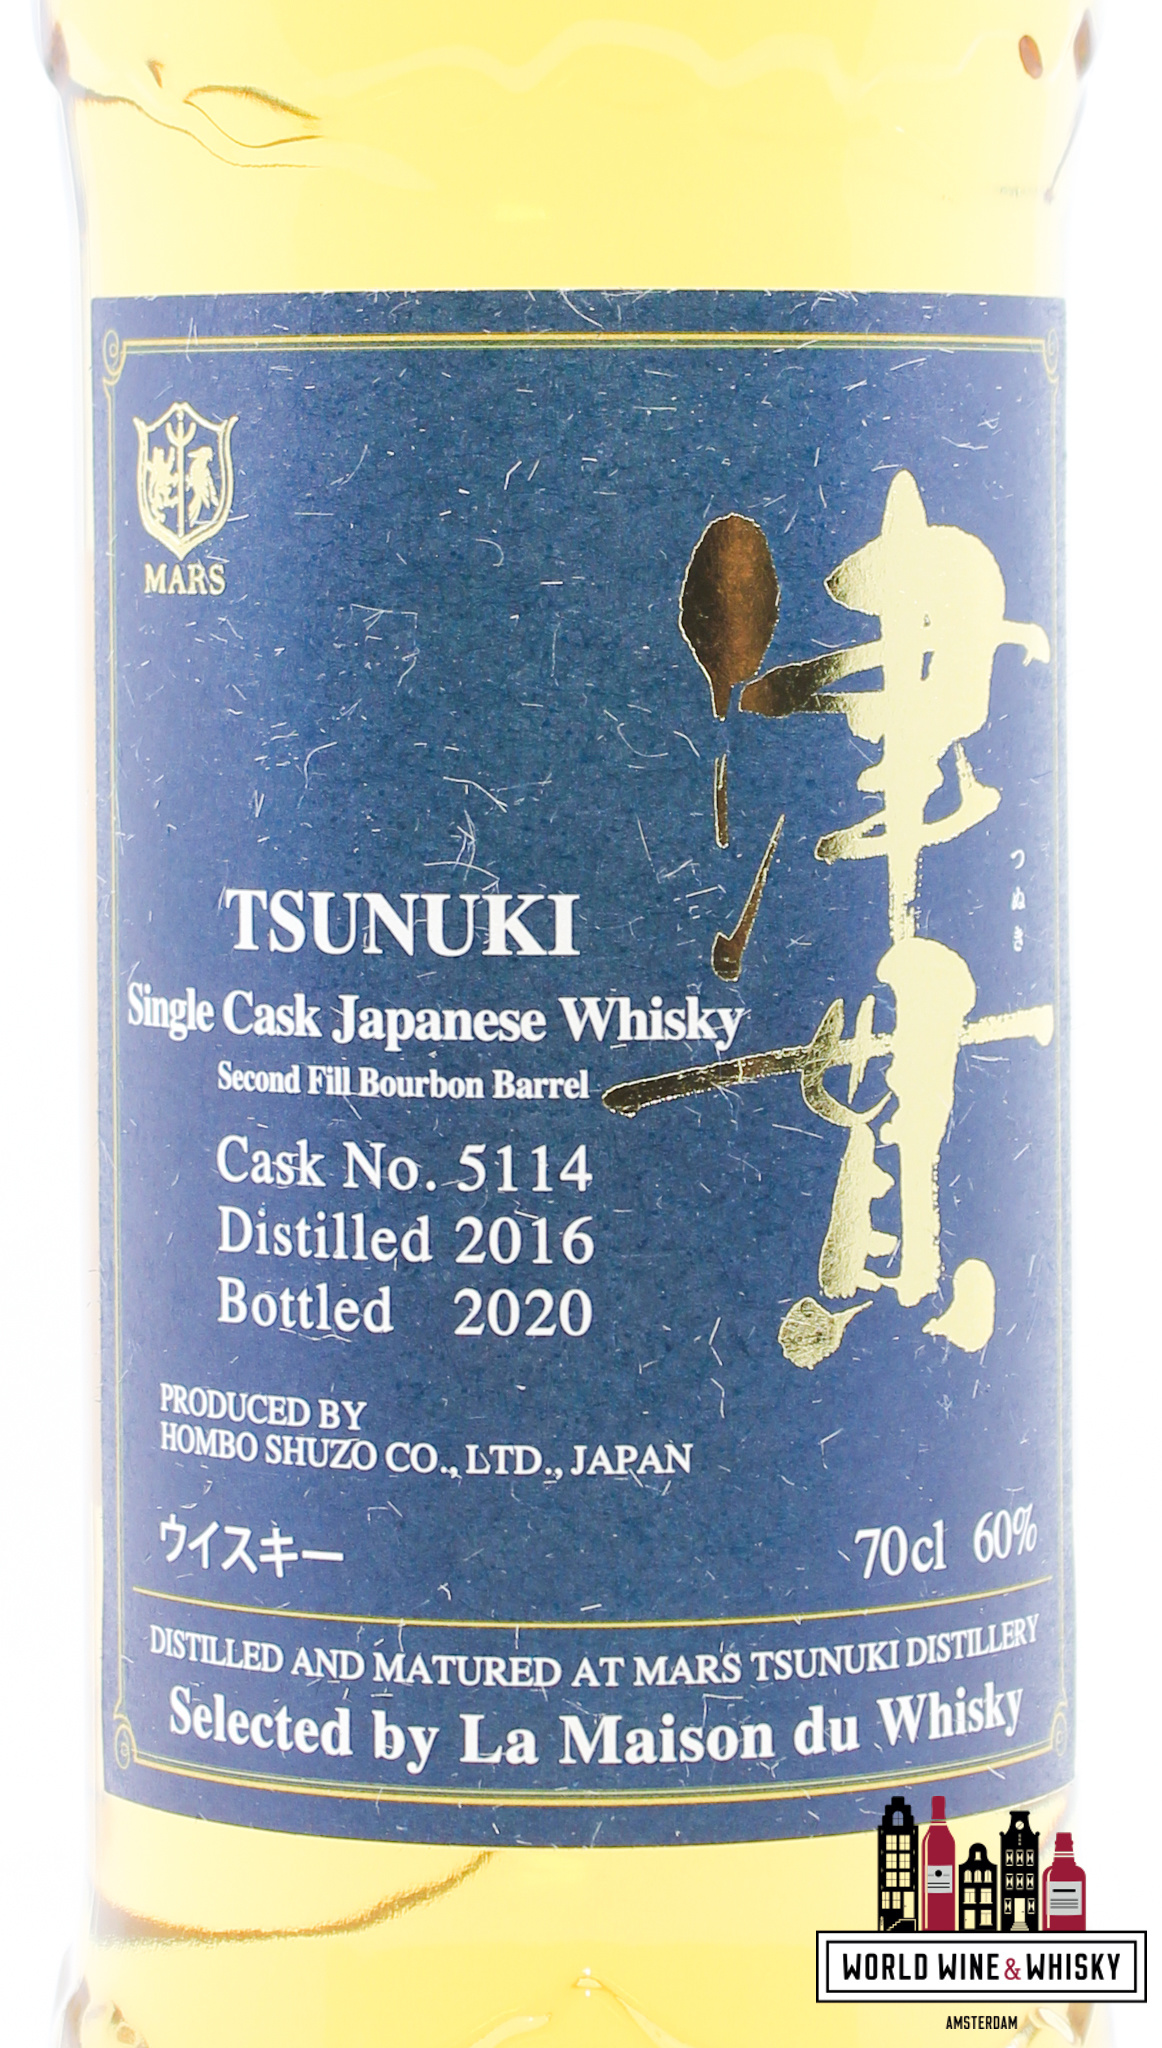 Mars Tsunuki Mars Tsunuki 2016 2020 - Tsunuki - Cask 5114 - Single Cask Japanese Whisky 60% (1 of 204)